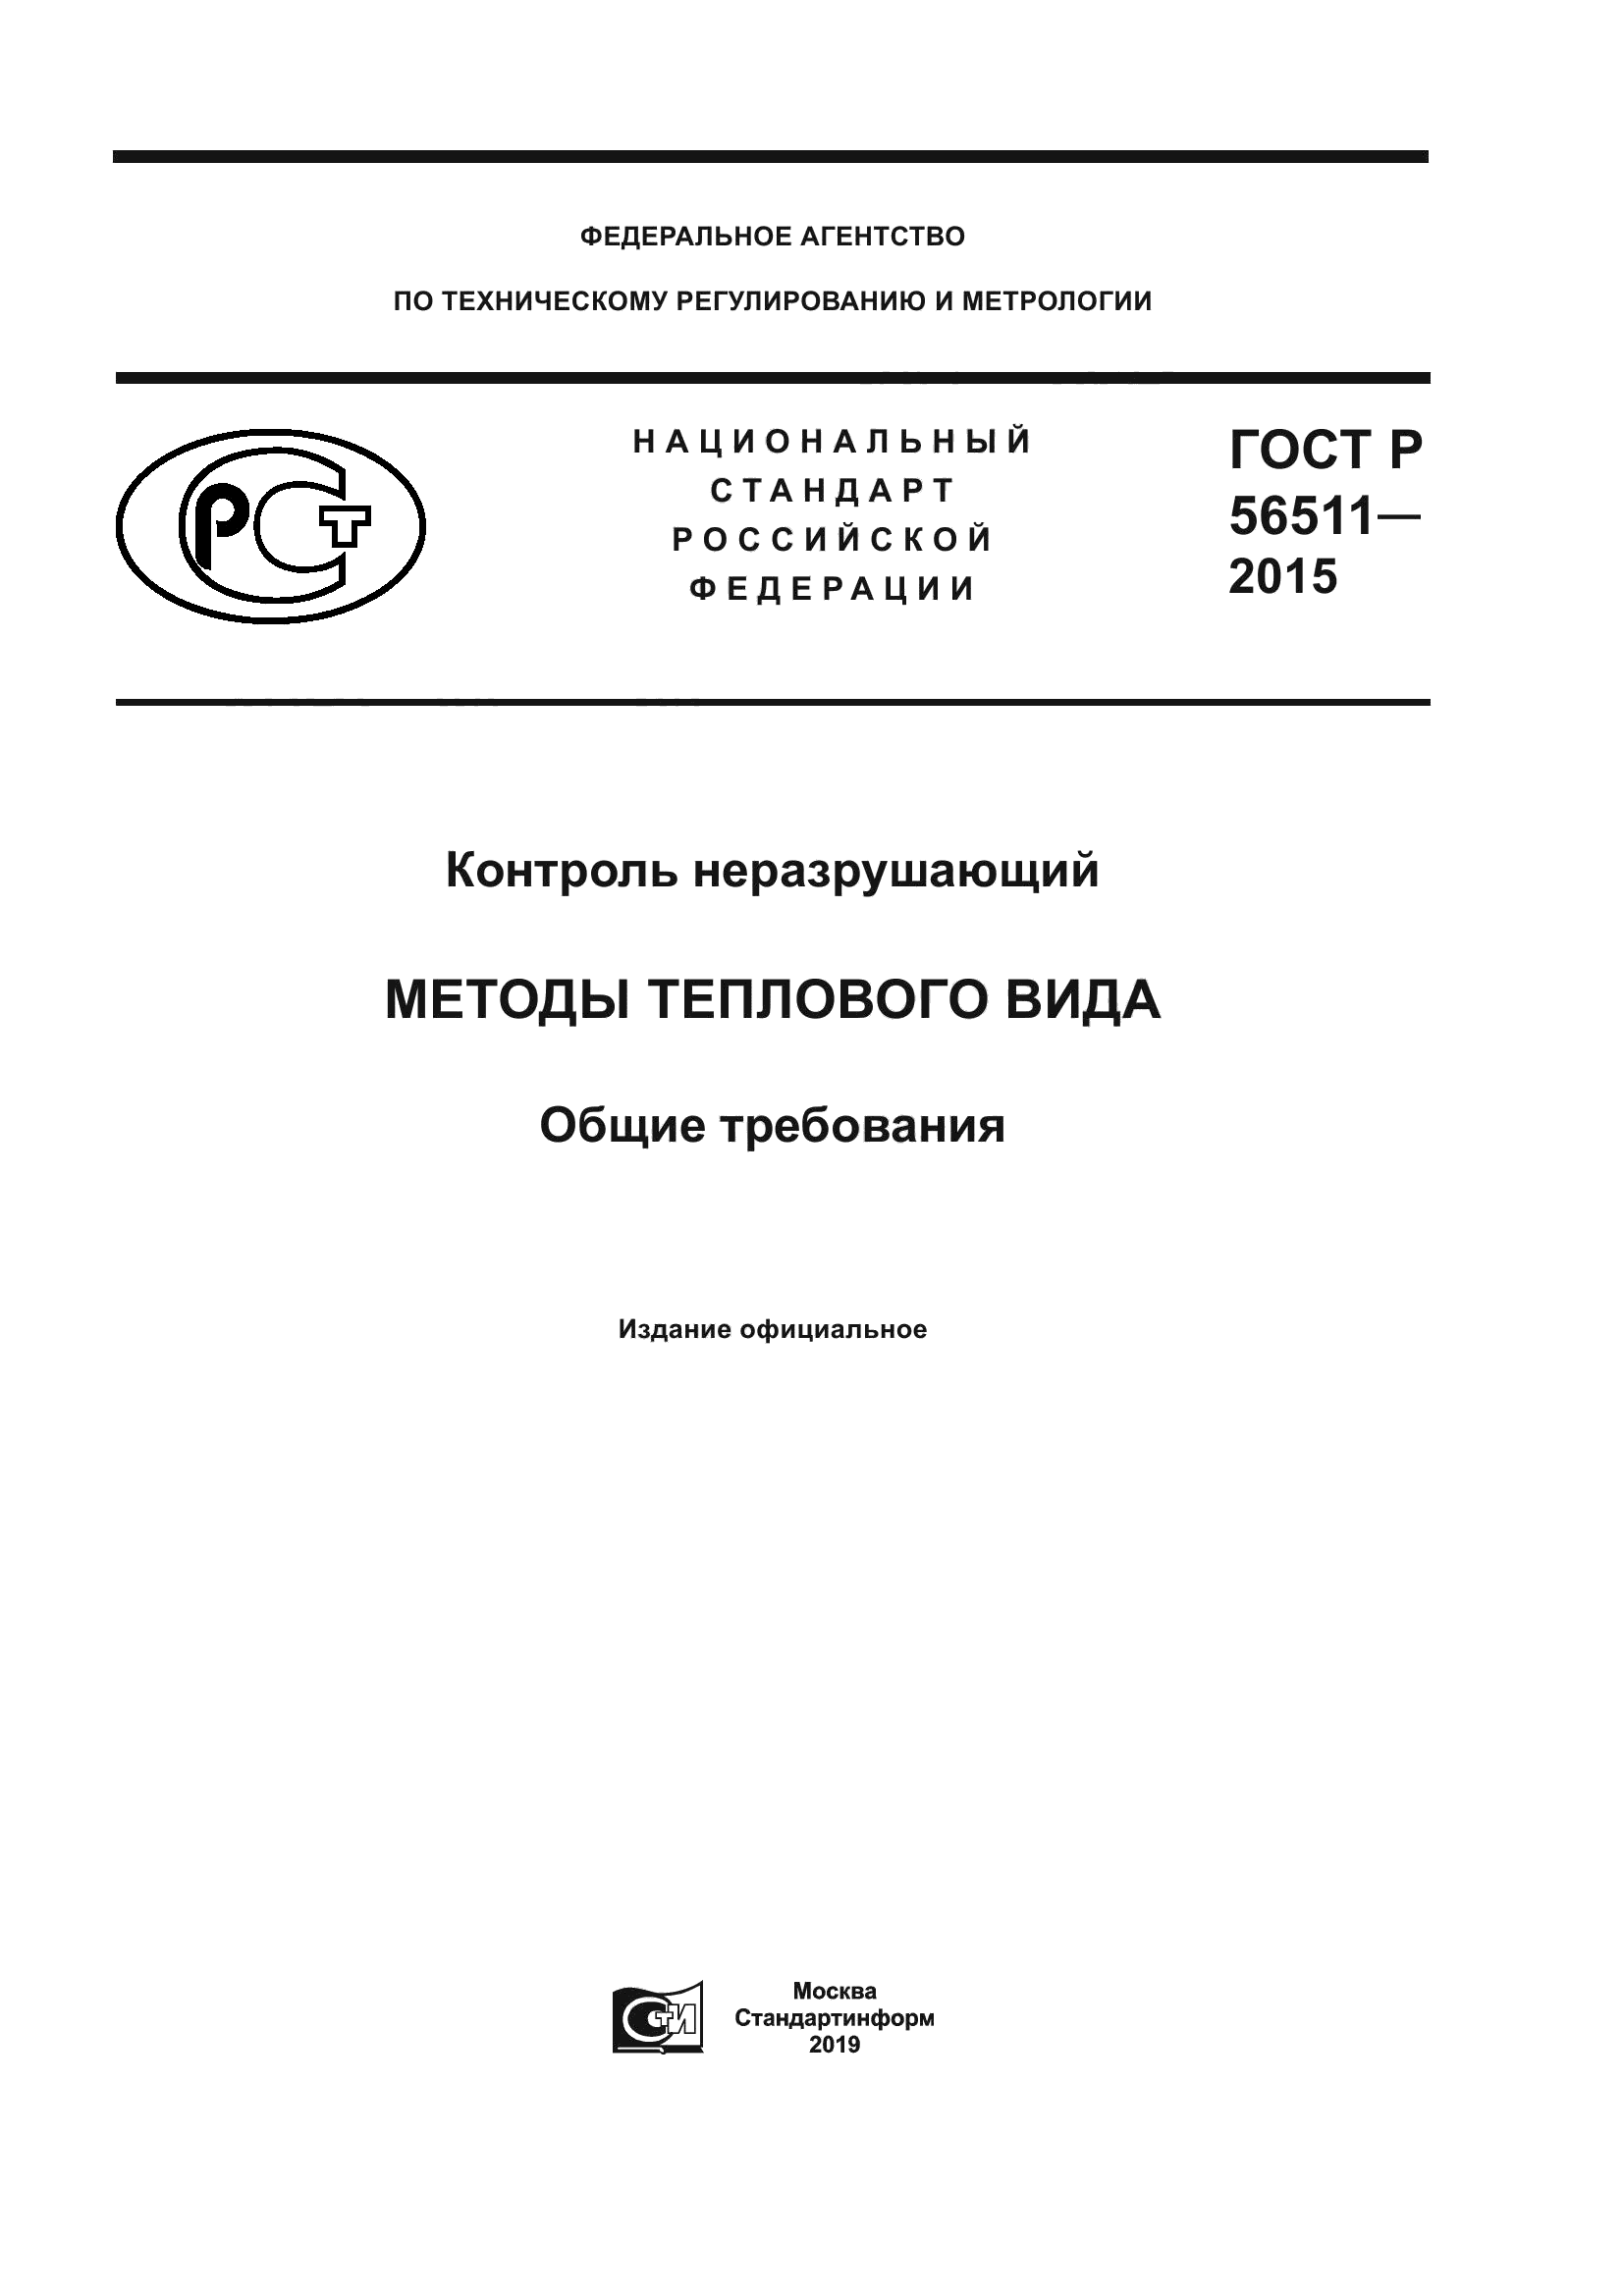 ГОСТ Р 56511-2015